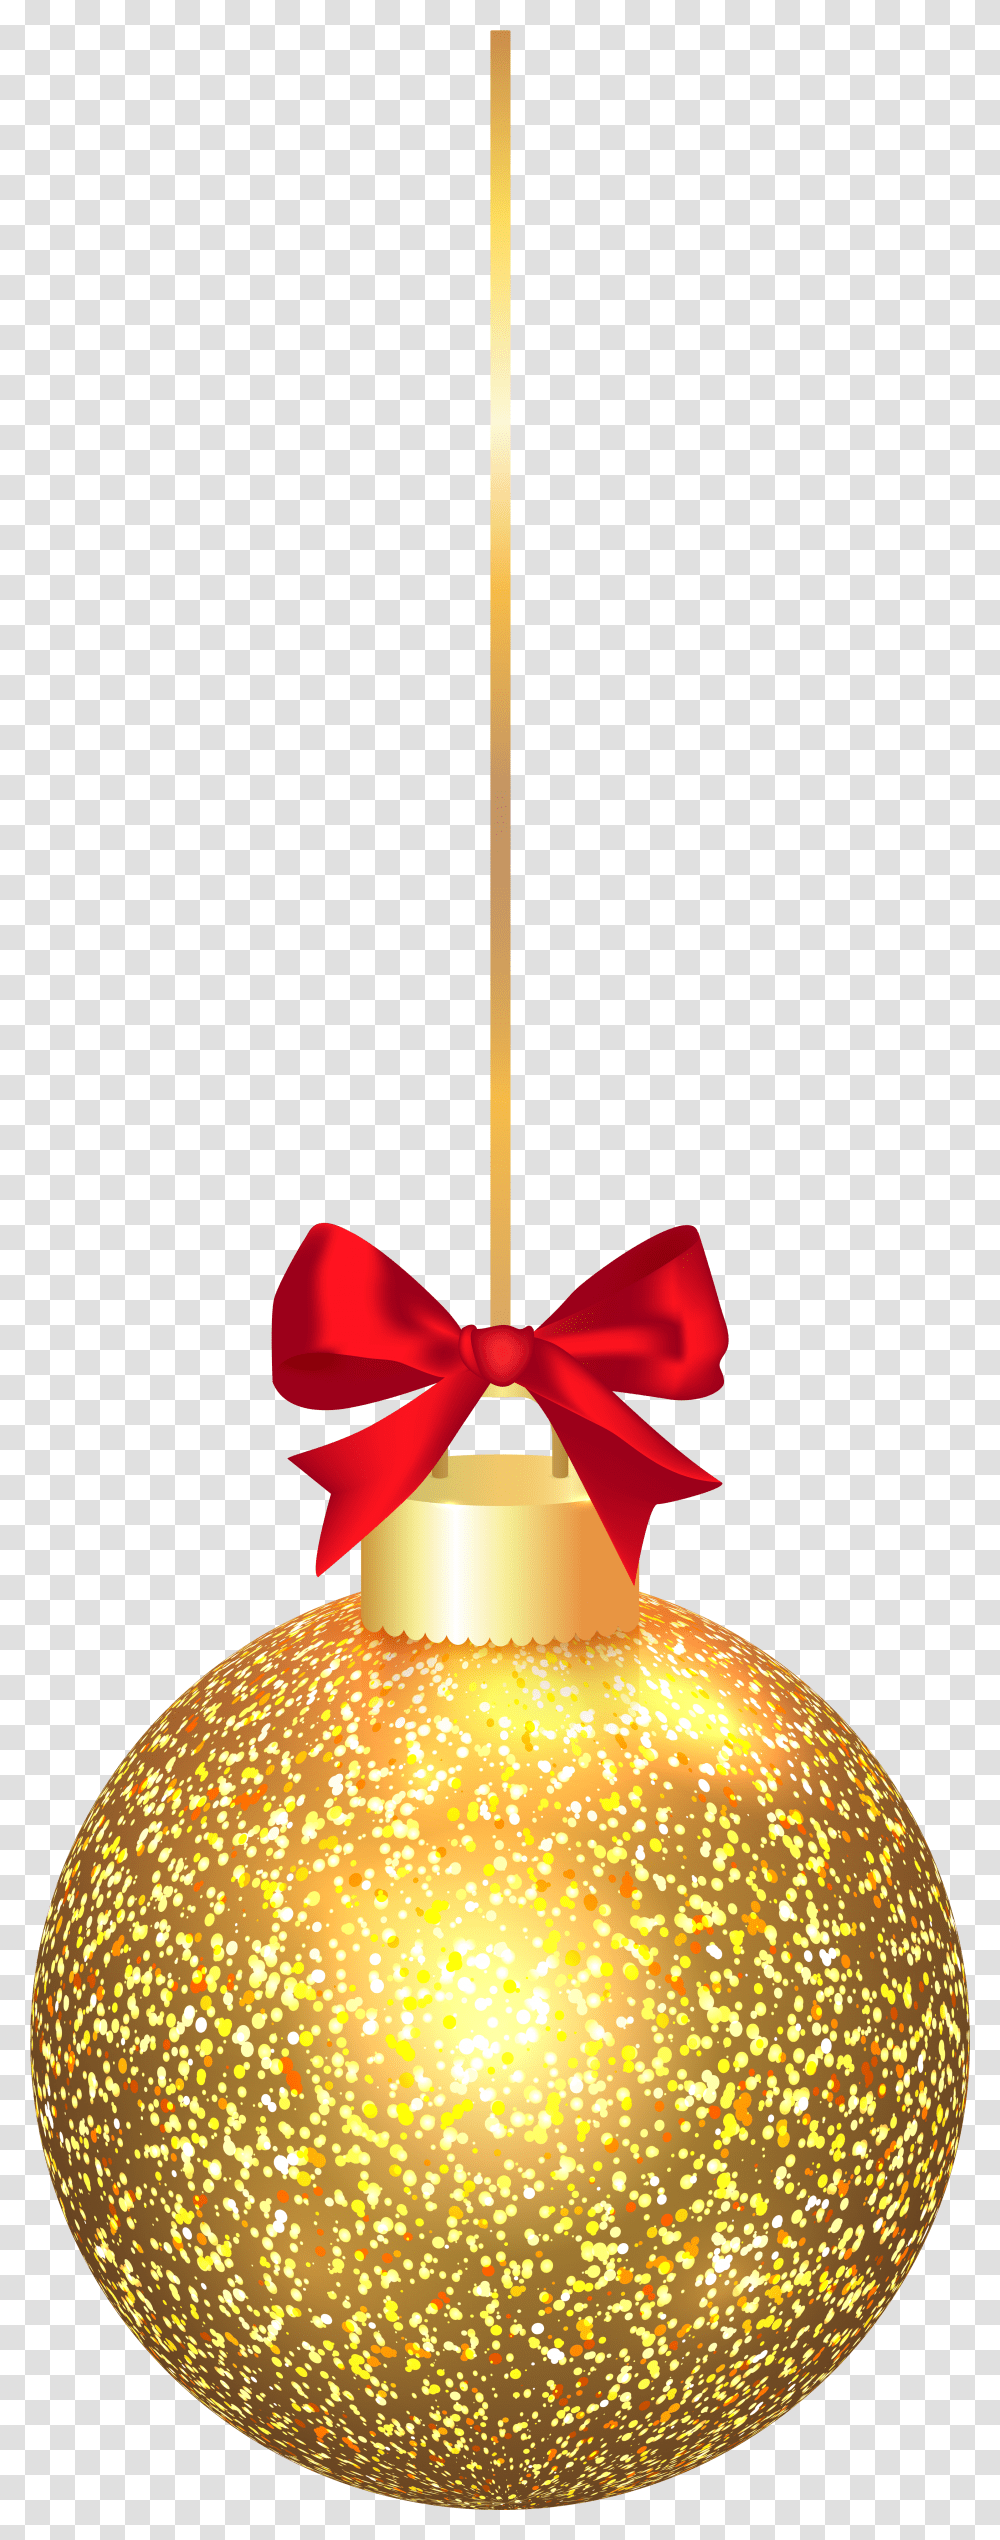 Christmas Clipart Elegant Elegant Christmas Images Clipart Transparent Png